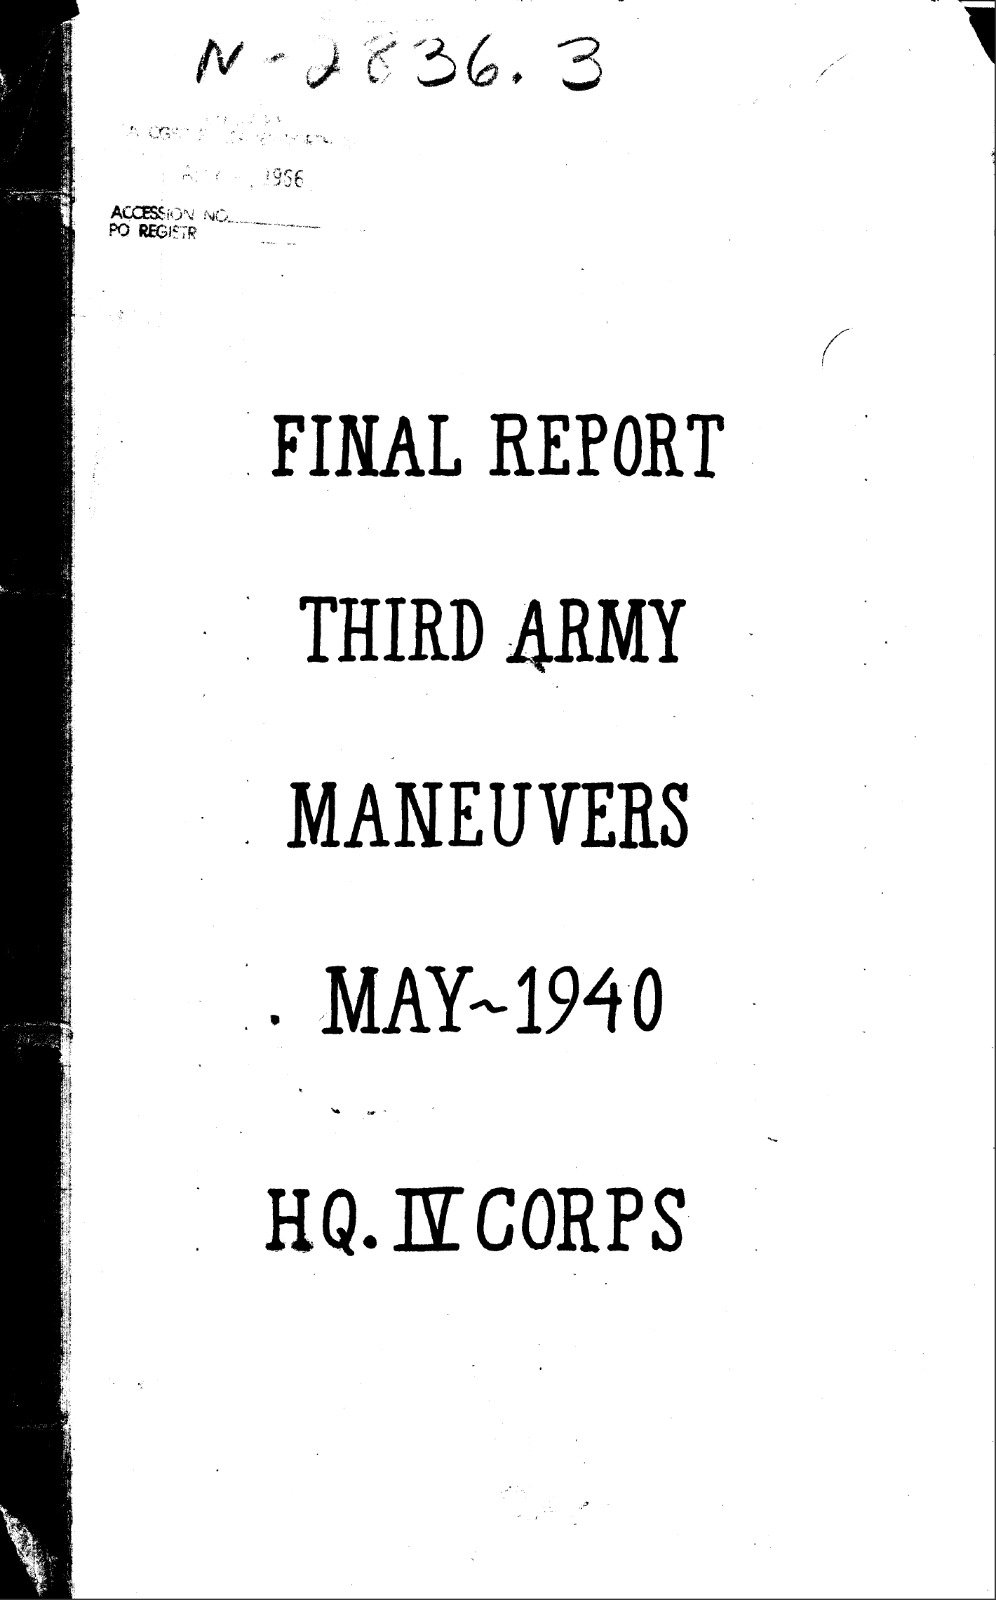 61 Page History Third Army IV Corps Sabine Area Louisiana Study 1940 on Data CD